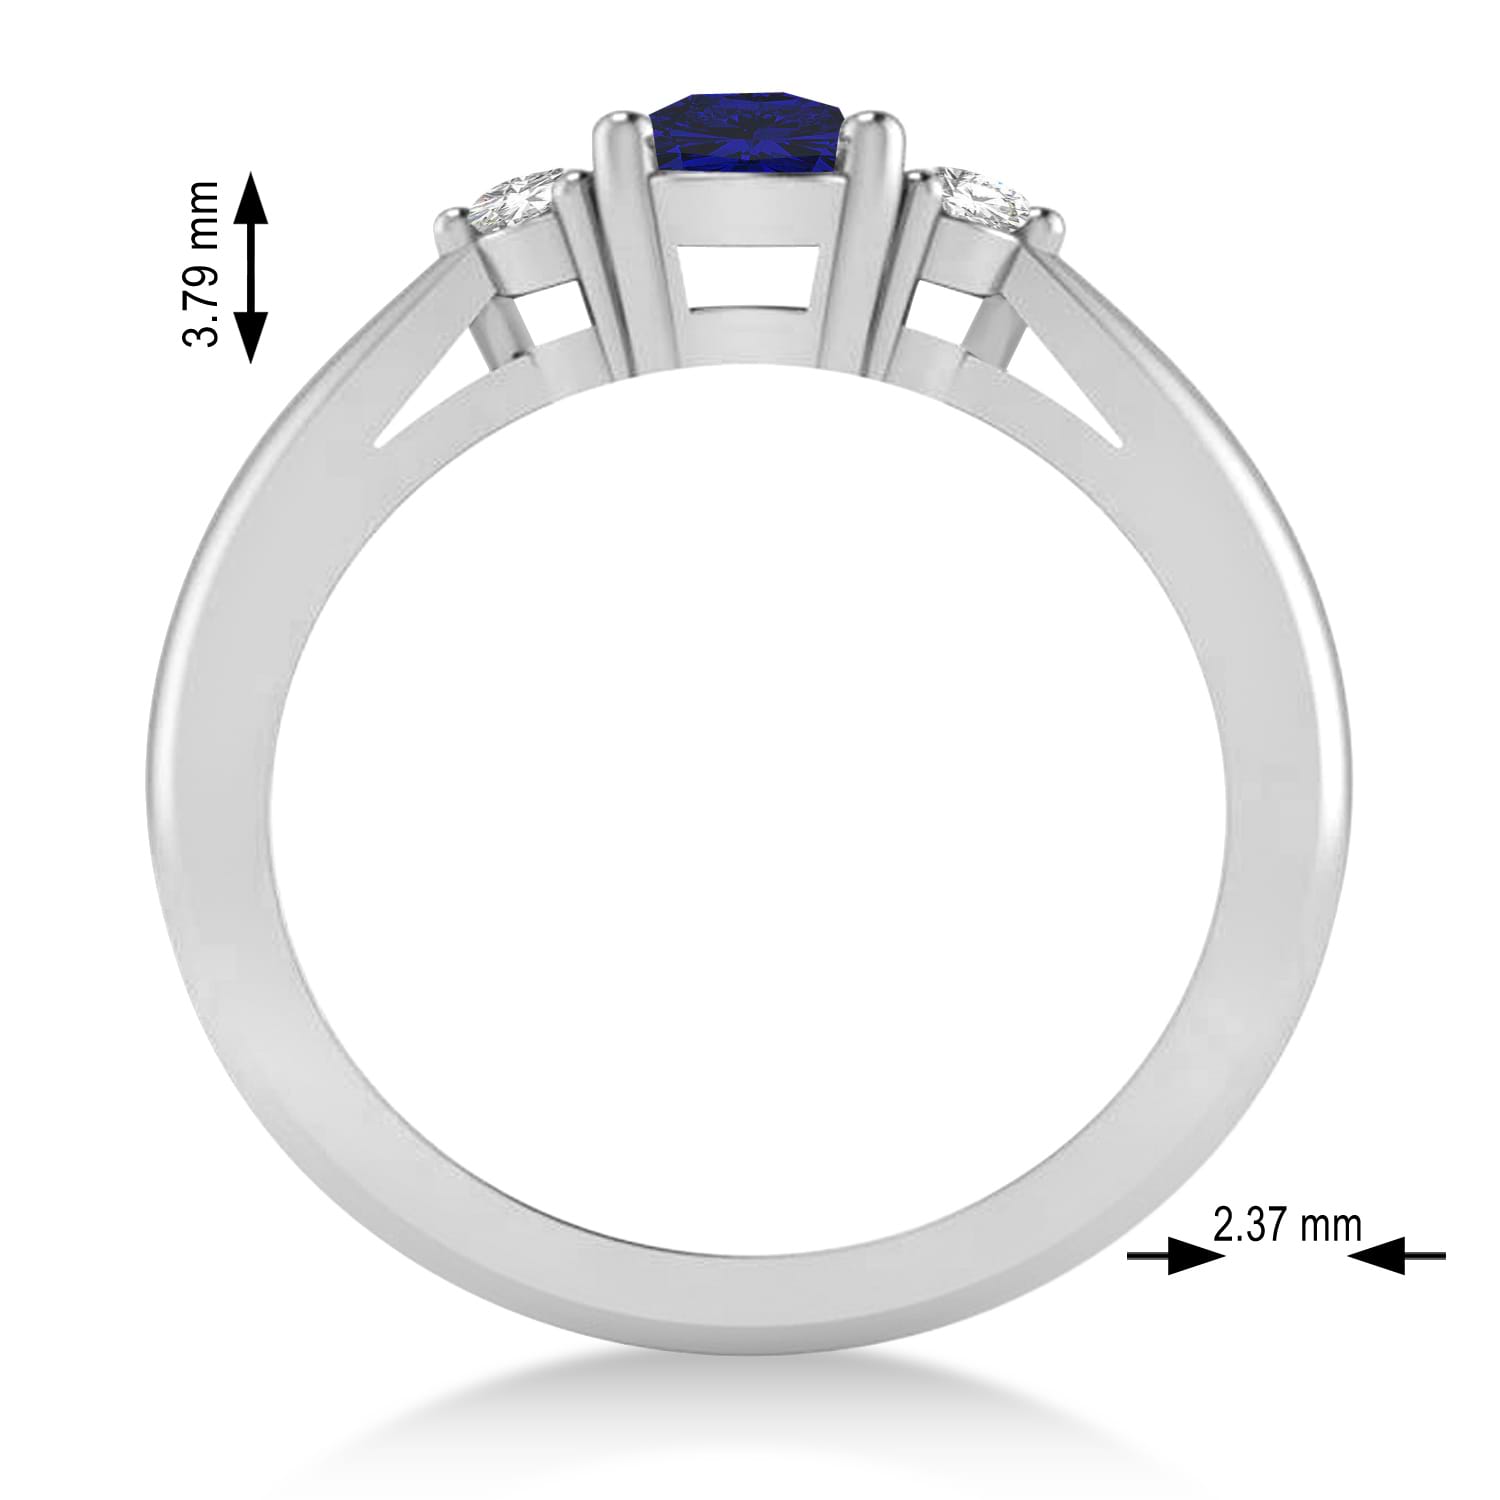 Cushion Blue Sapphire & Diamond Three-Stone Engagement Ring 14k White Gold (1.14ct)